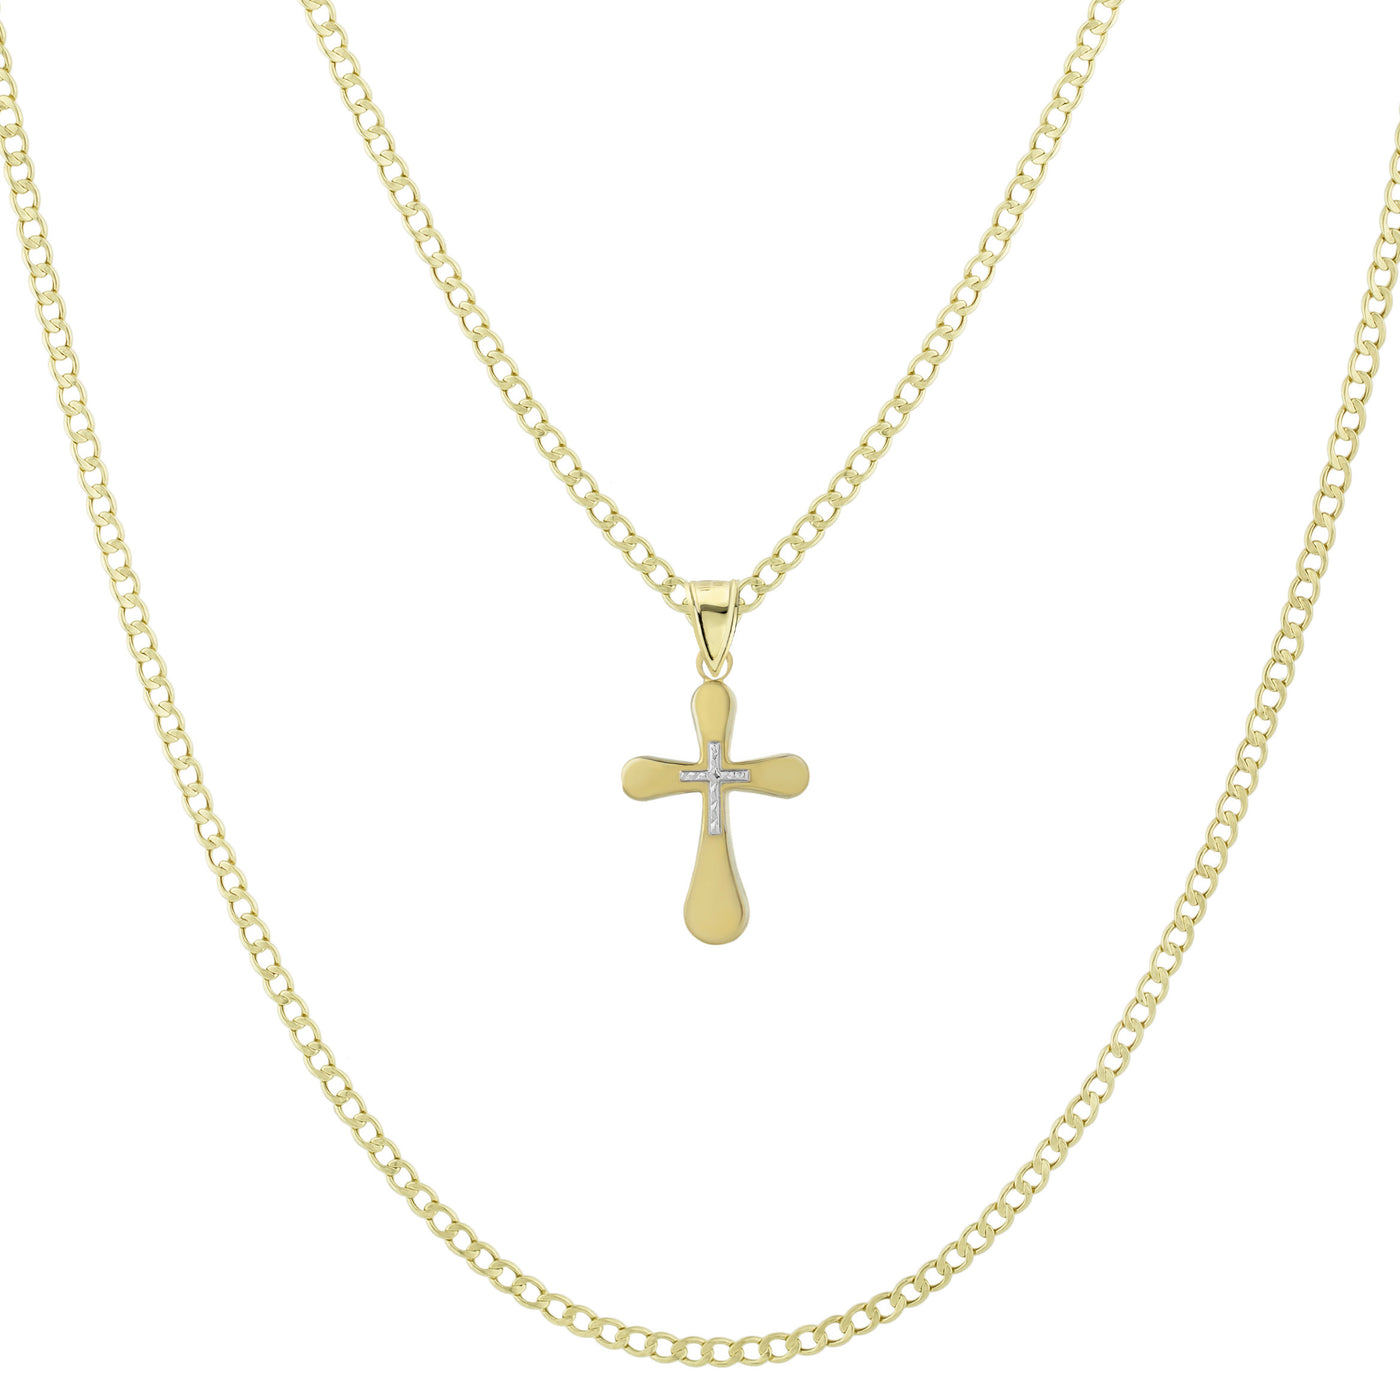 1 1/4" Cross Pendant & Chain Necklace Set 10K Yellow White Gold